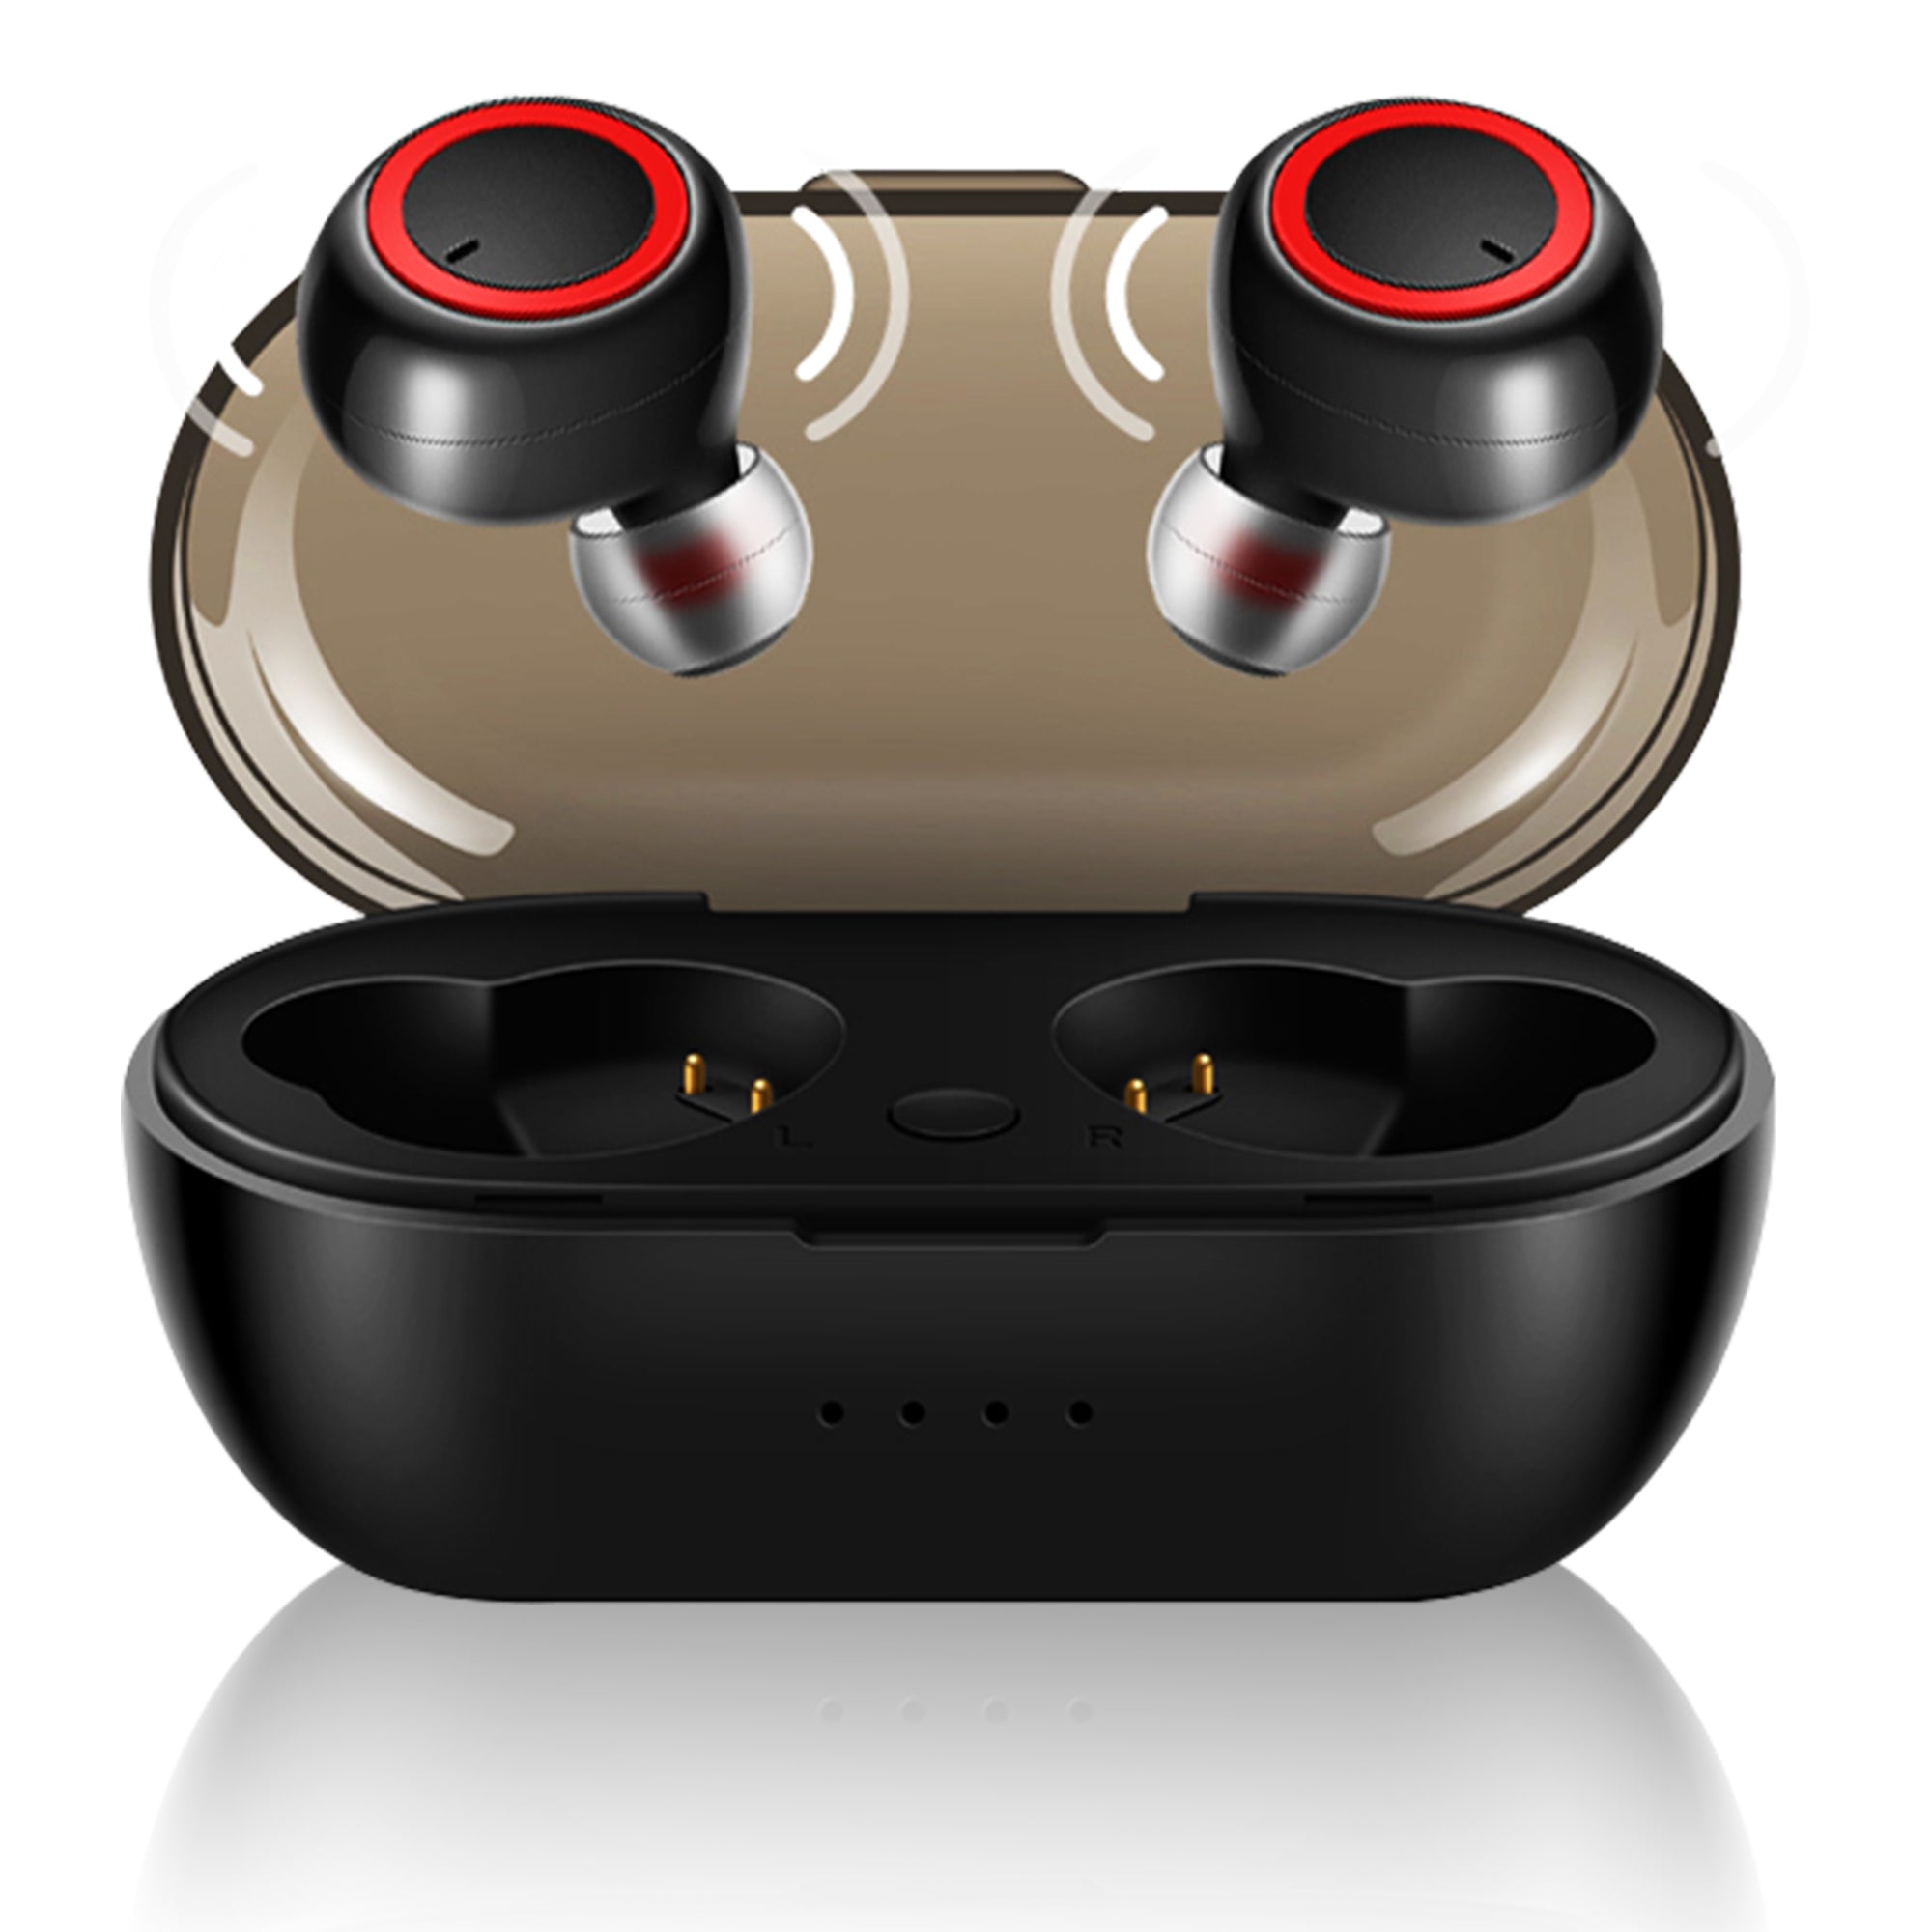 Bluetooth Earpods Buy Them Online Now- 5 Core